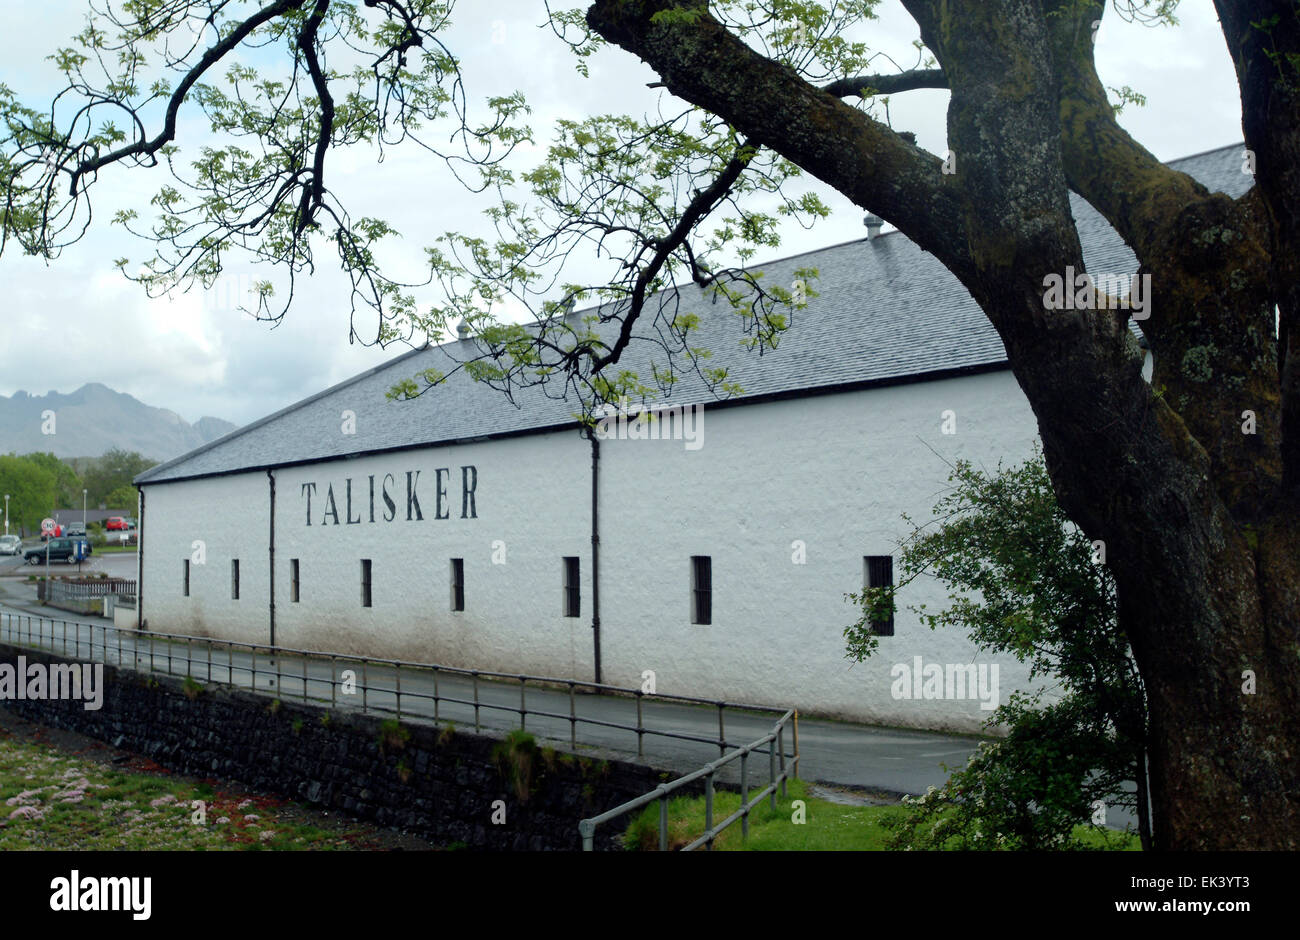 Talisker Scotch Whisky Distiller Carbost Isle of Skye Scotland UK Europe Stock Photo